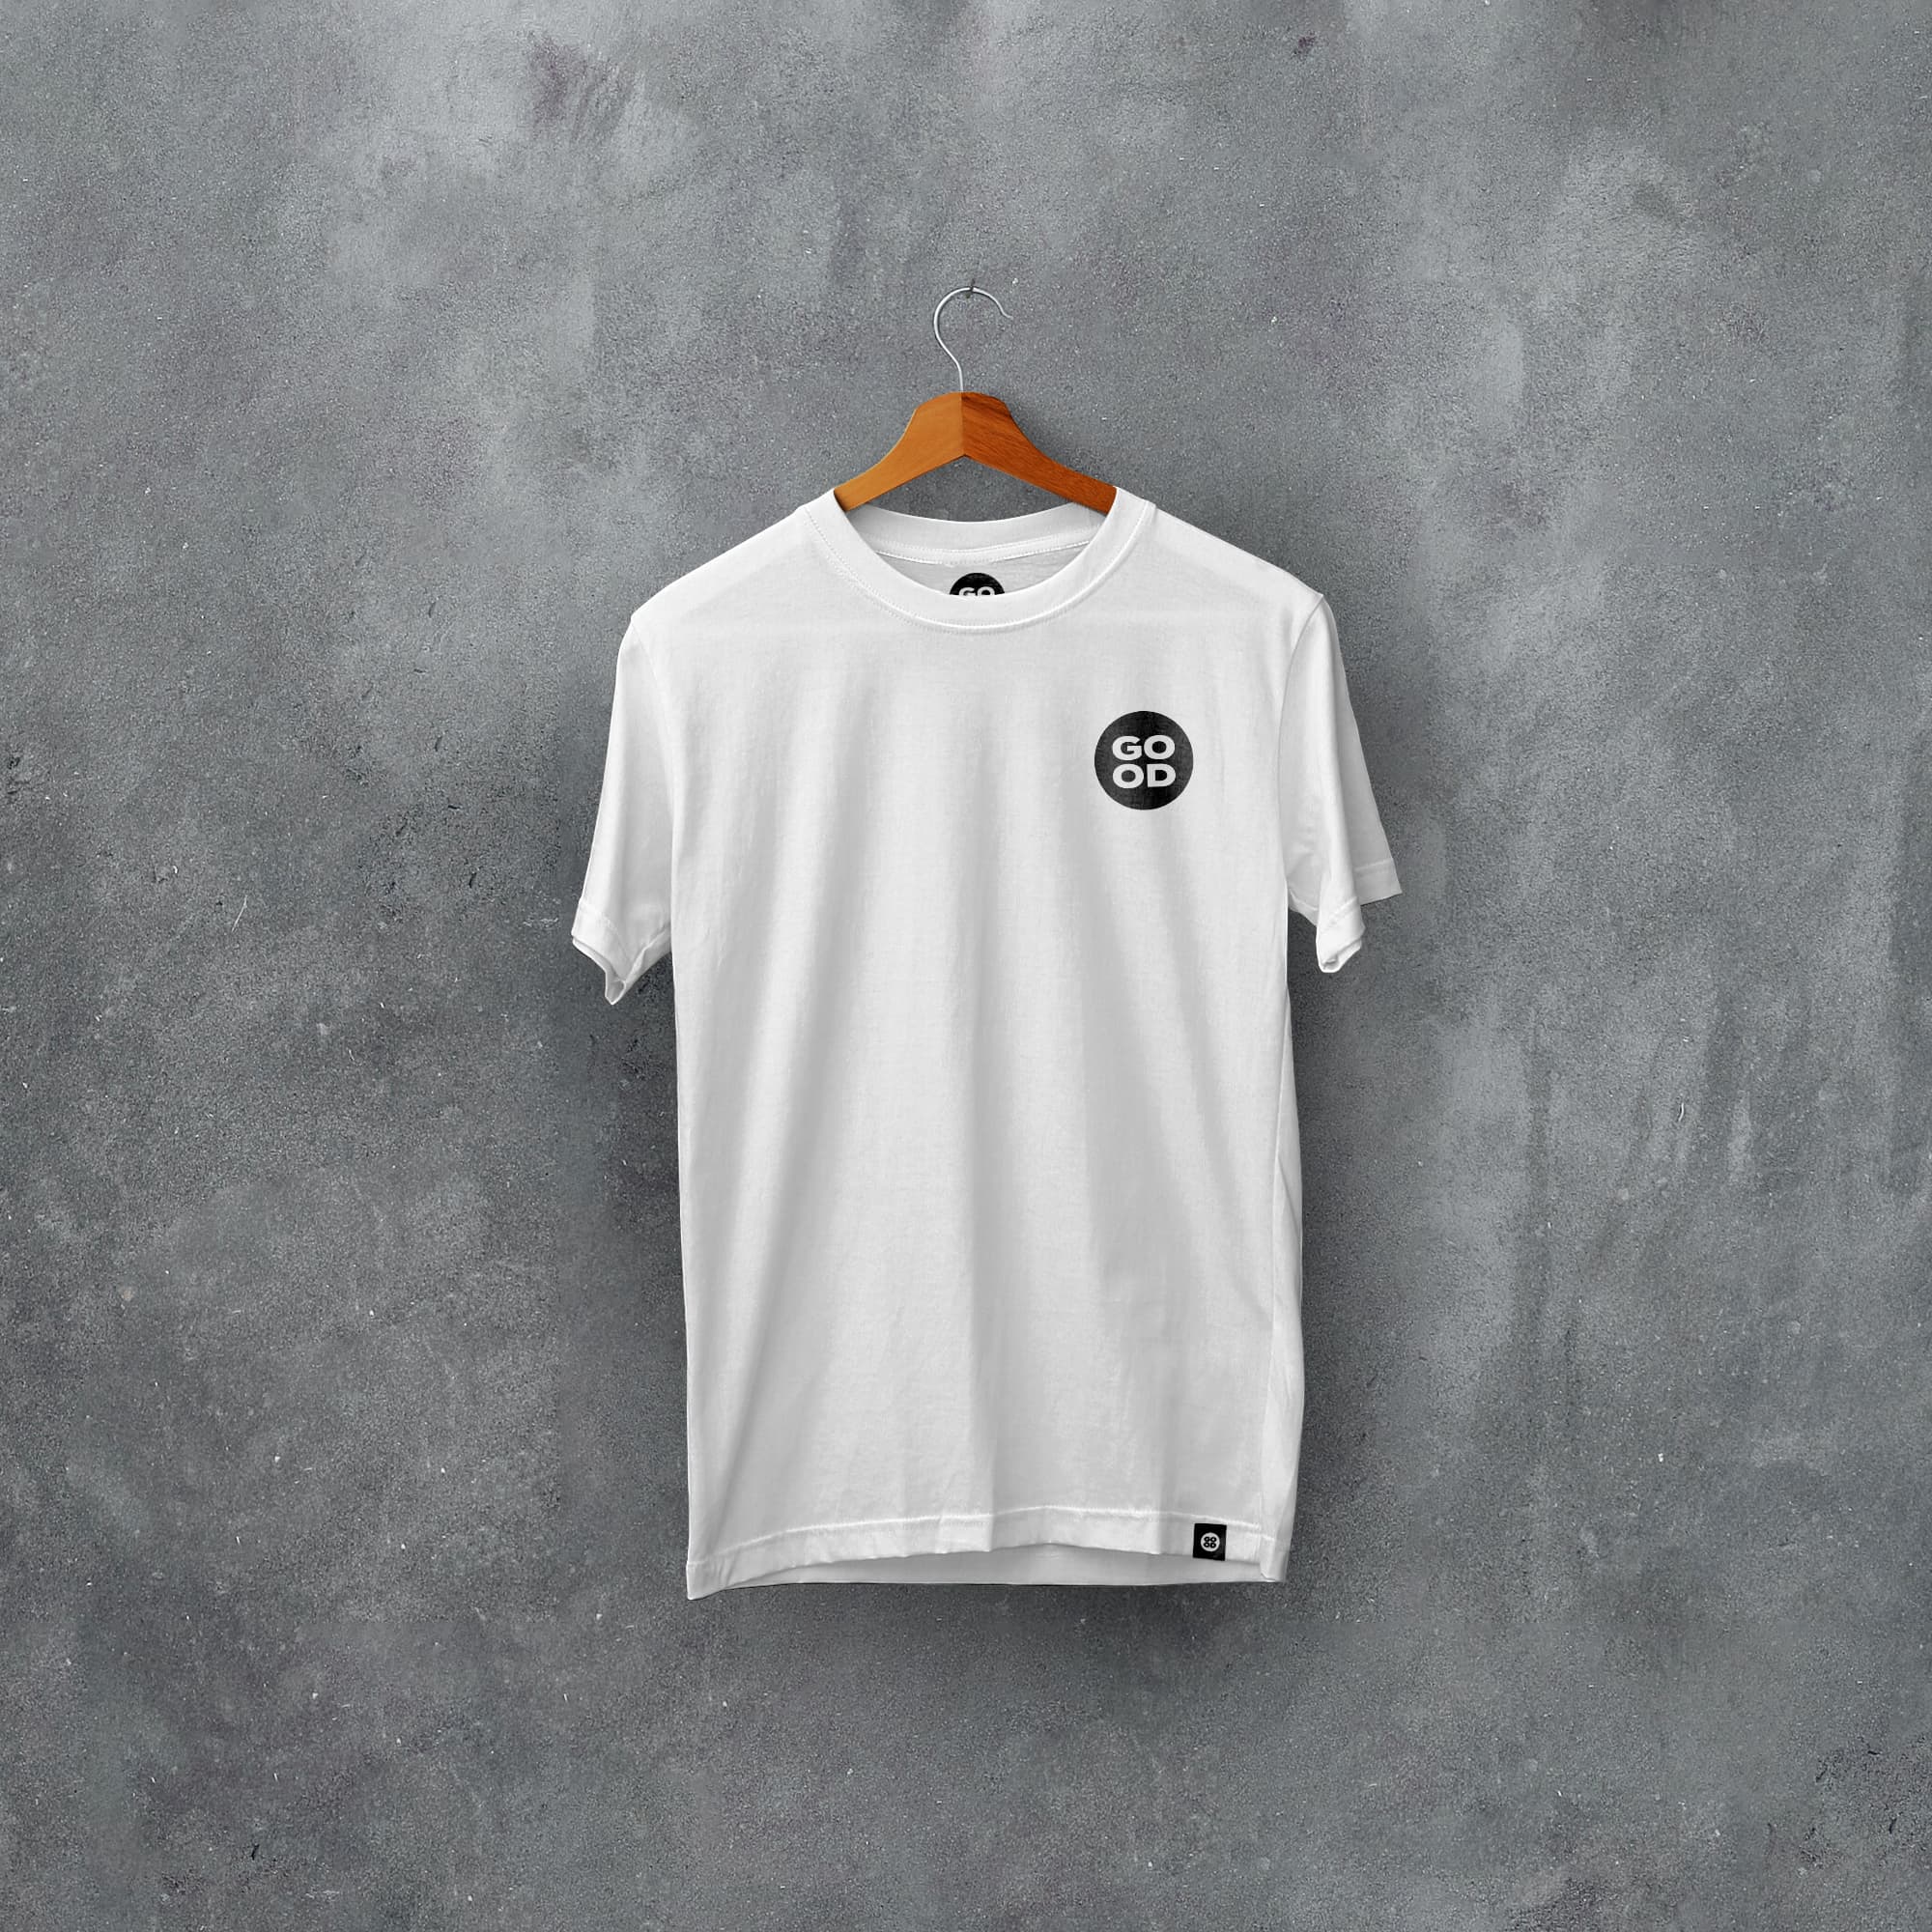 West Ham Classic Kits Football T-Shirt